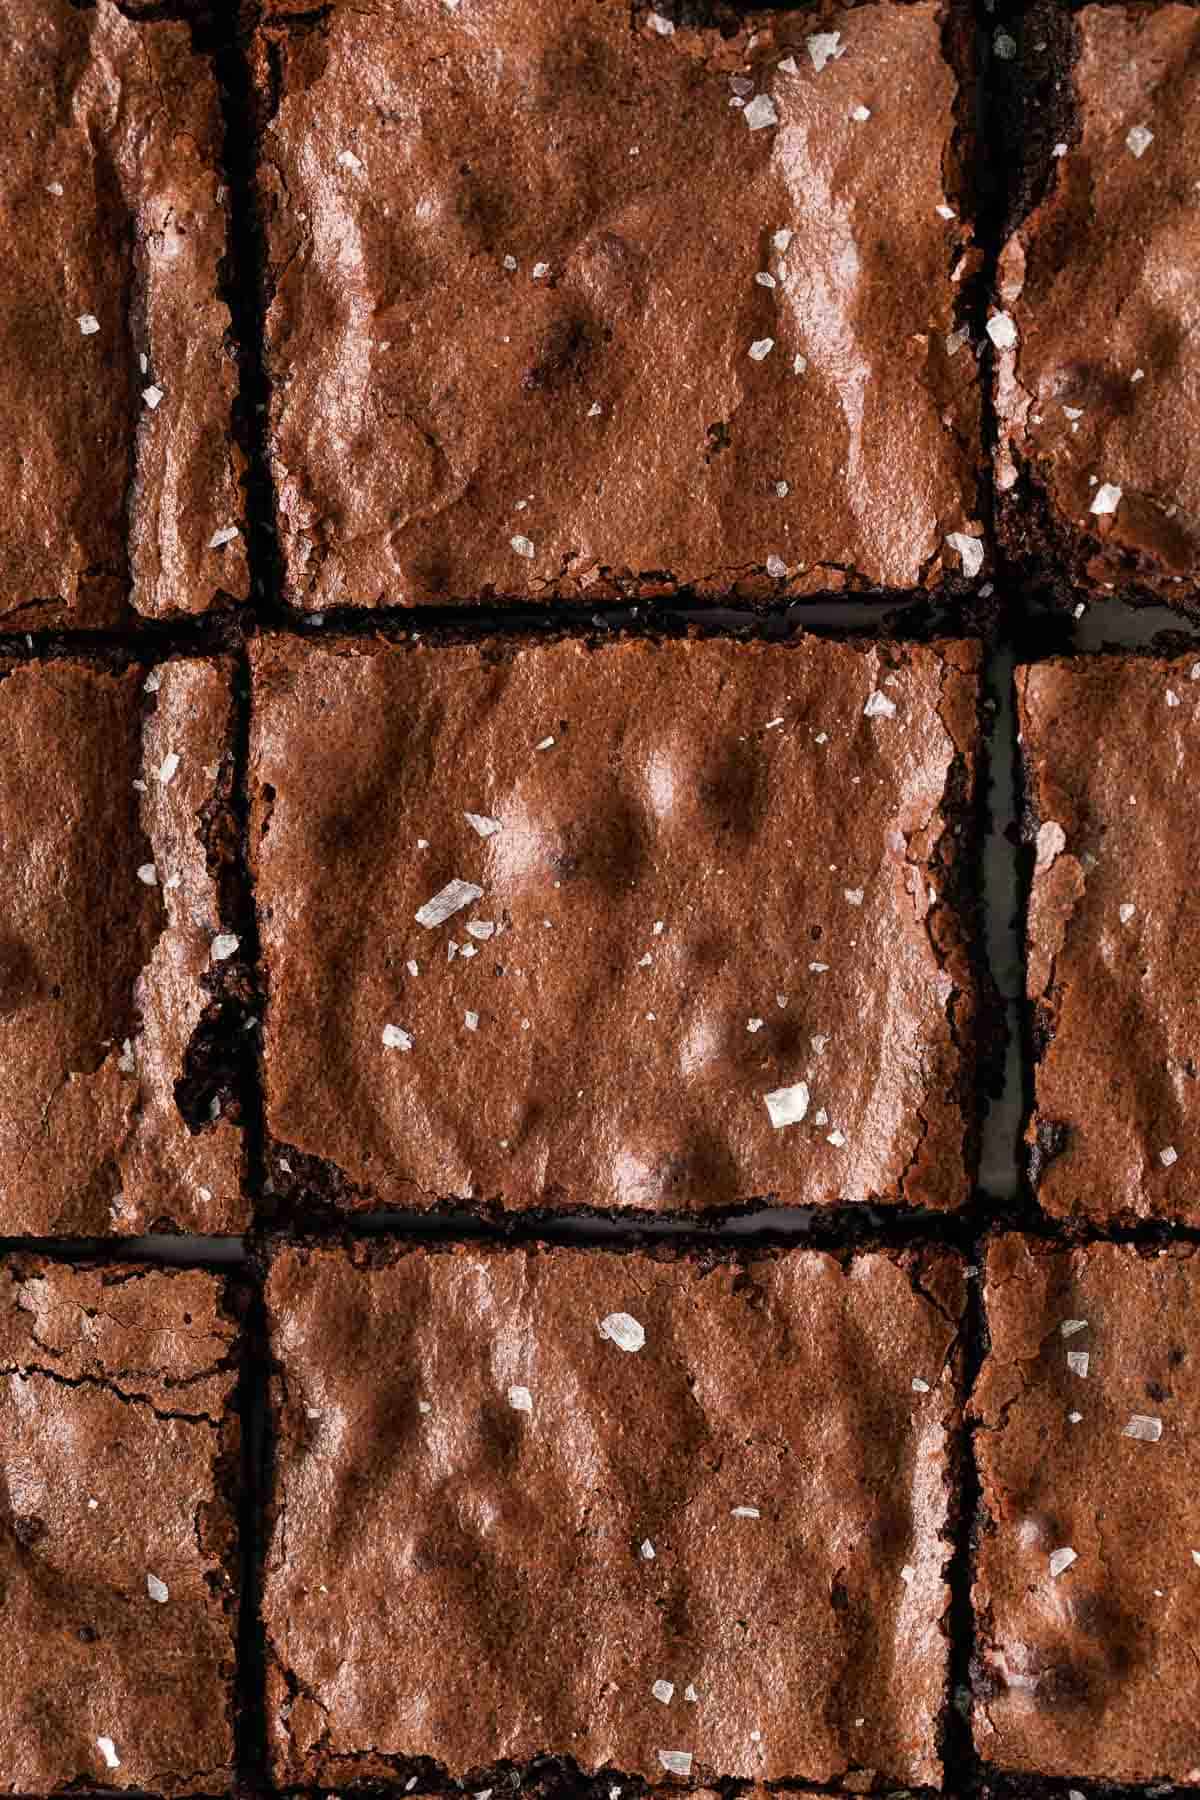 https://meaningfuleats.com/wp-content/uploads/2022/04/best-gluten-free-brownies.jpg